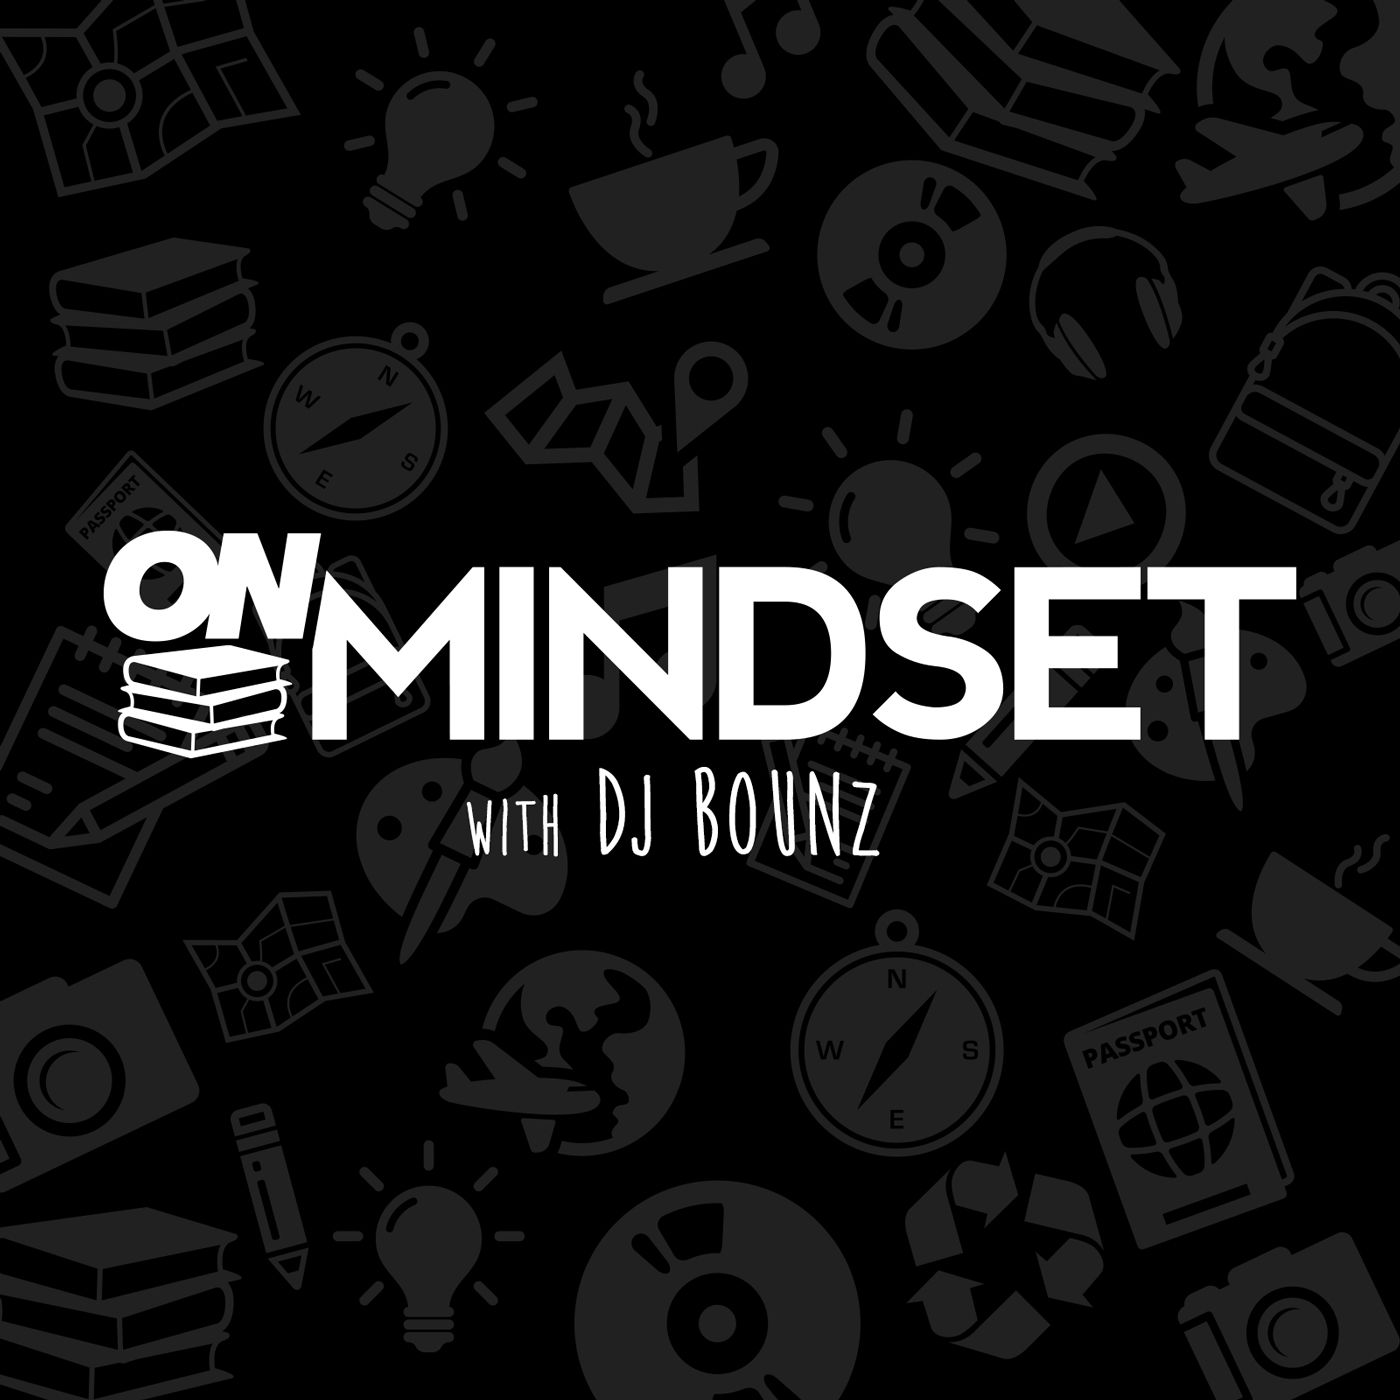 On Mindset with DJ Bounz